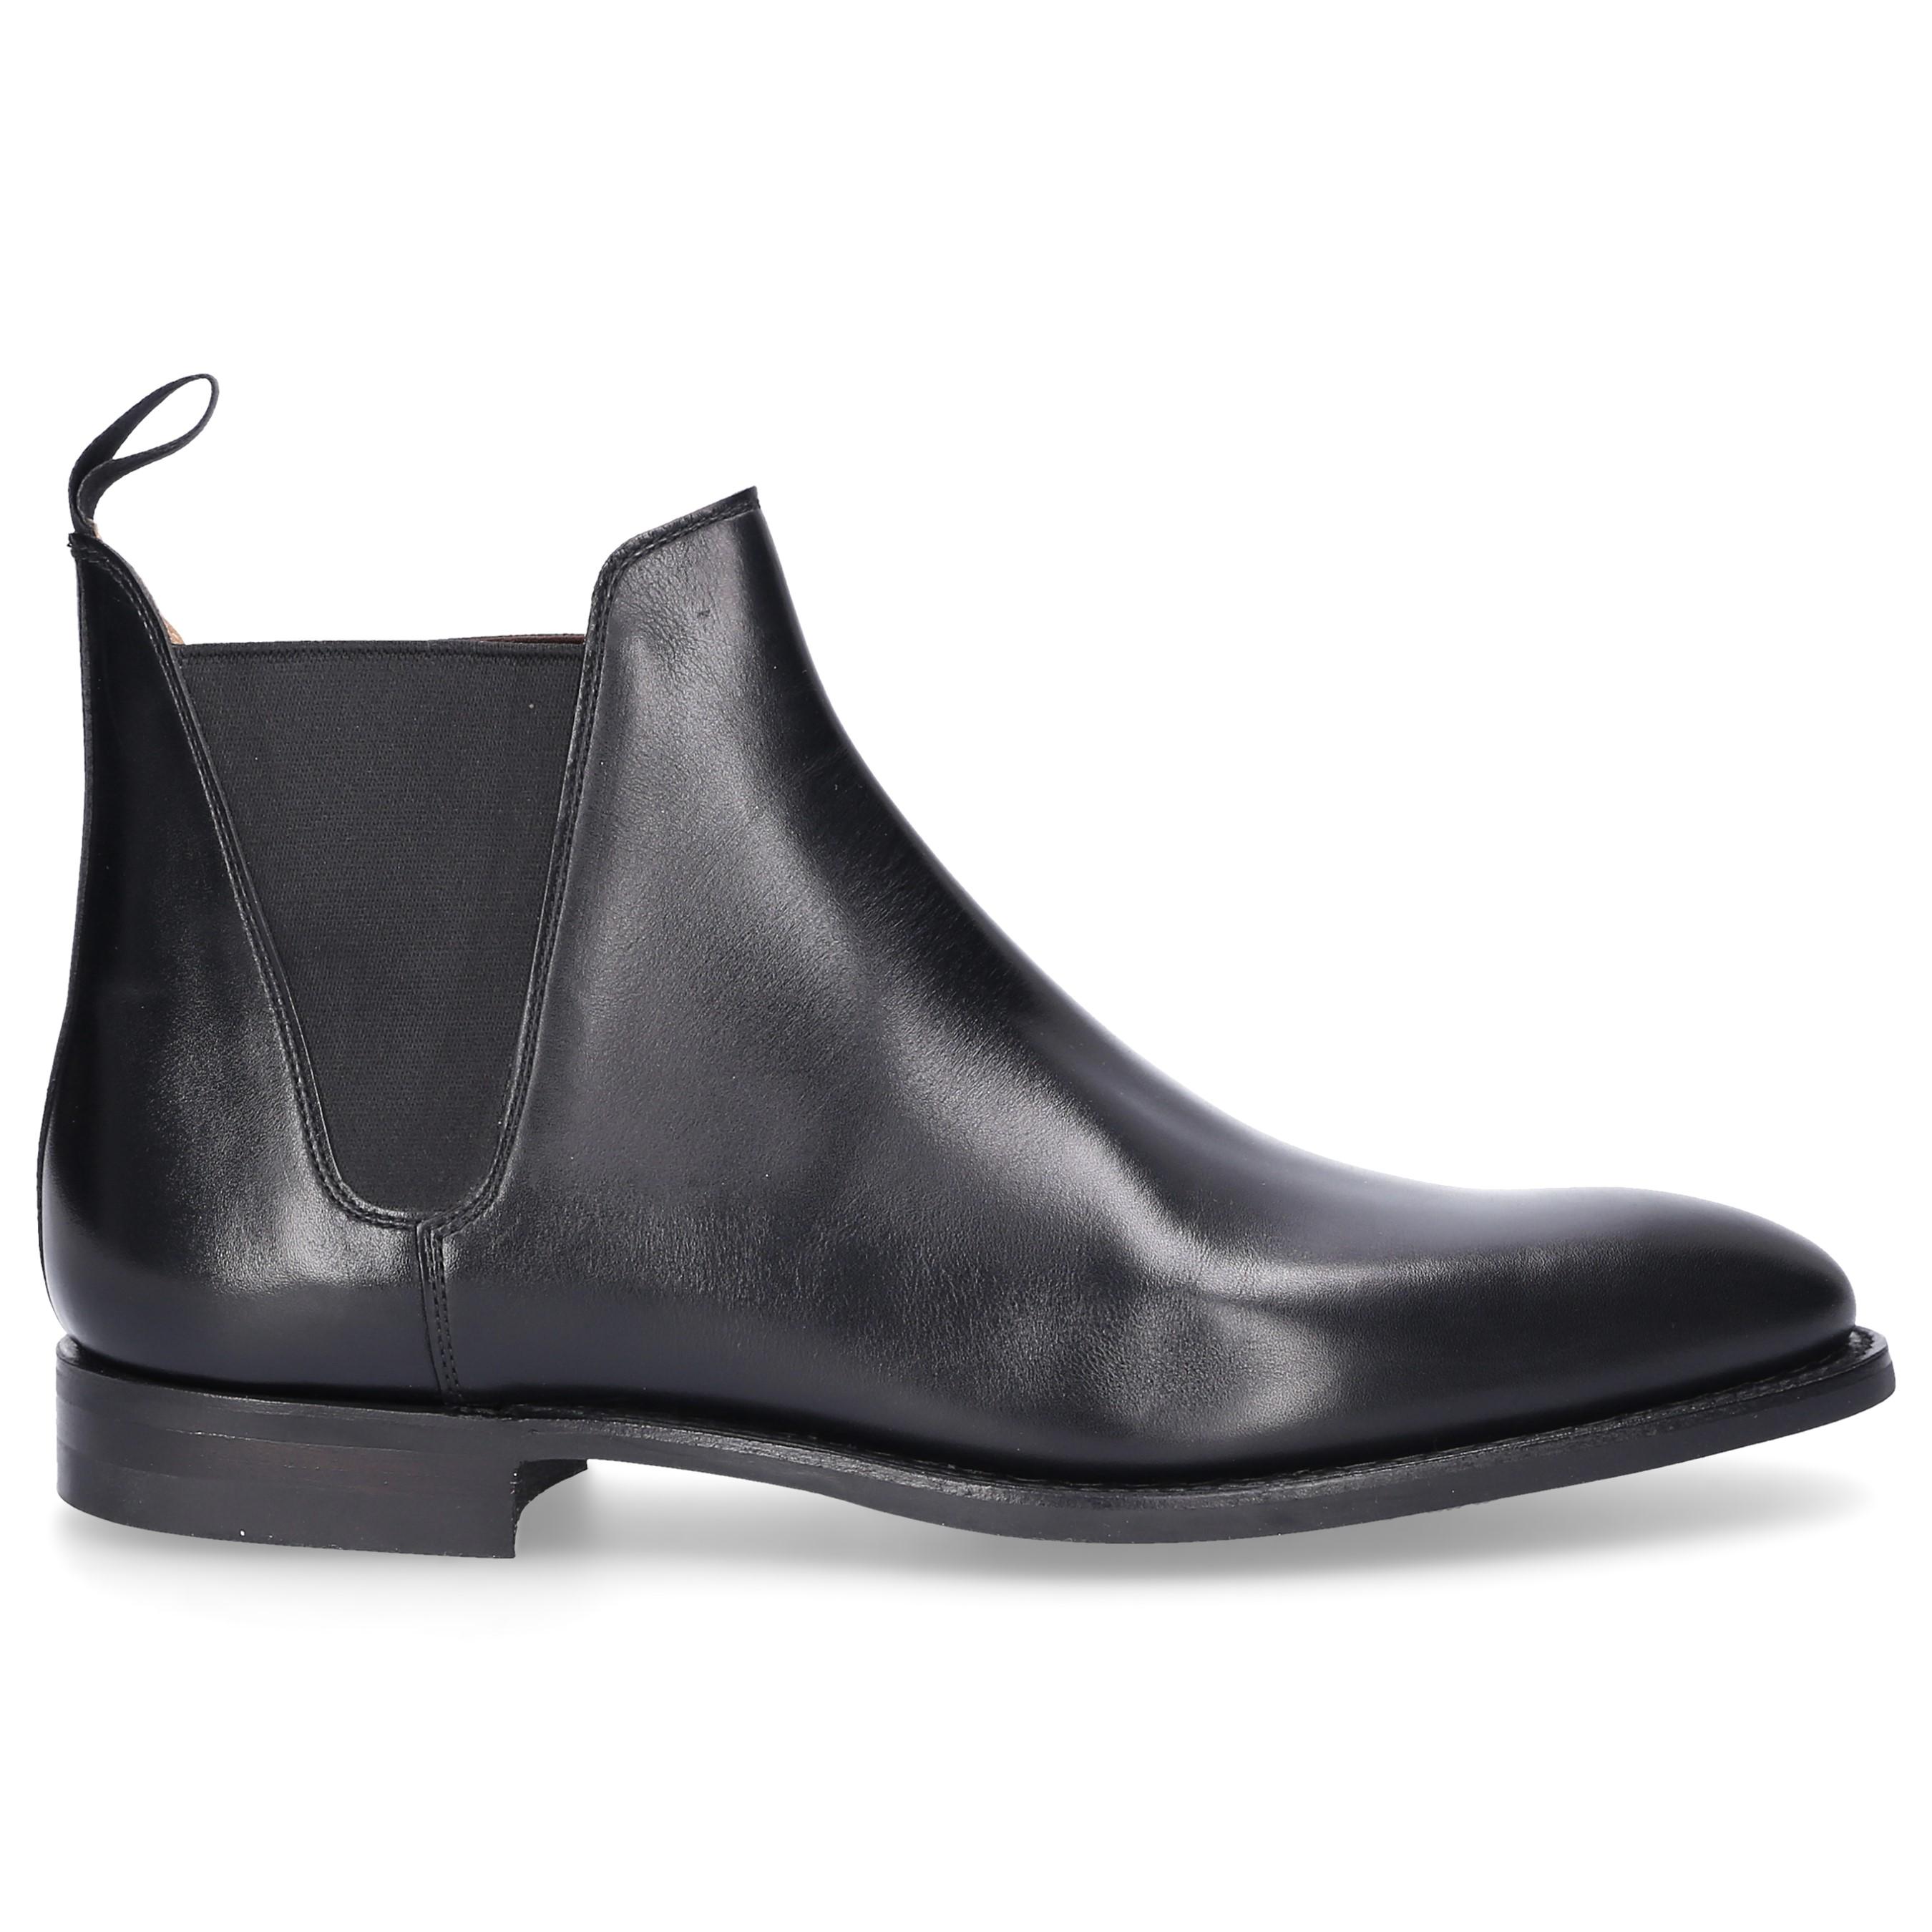 Crockett and Jones Chelsea Boots 8 Leather Black for Men - Lyst